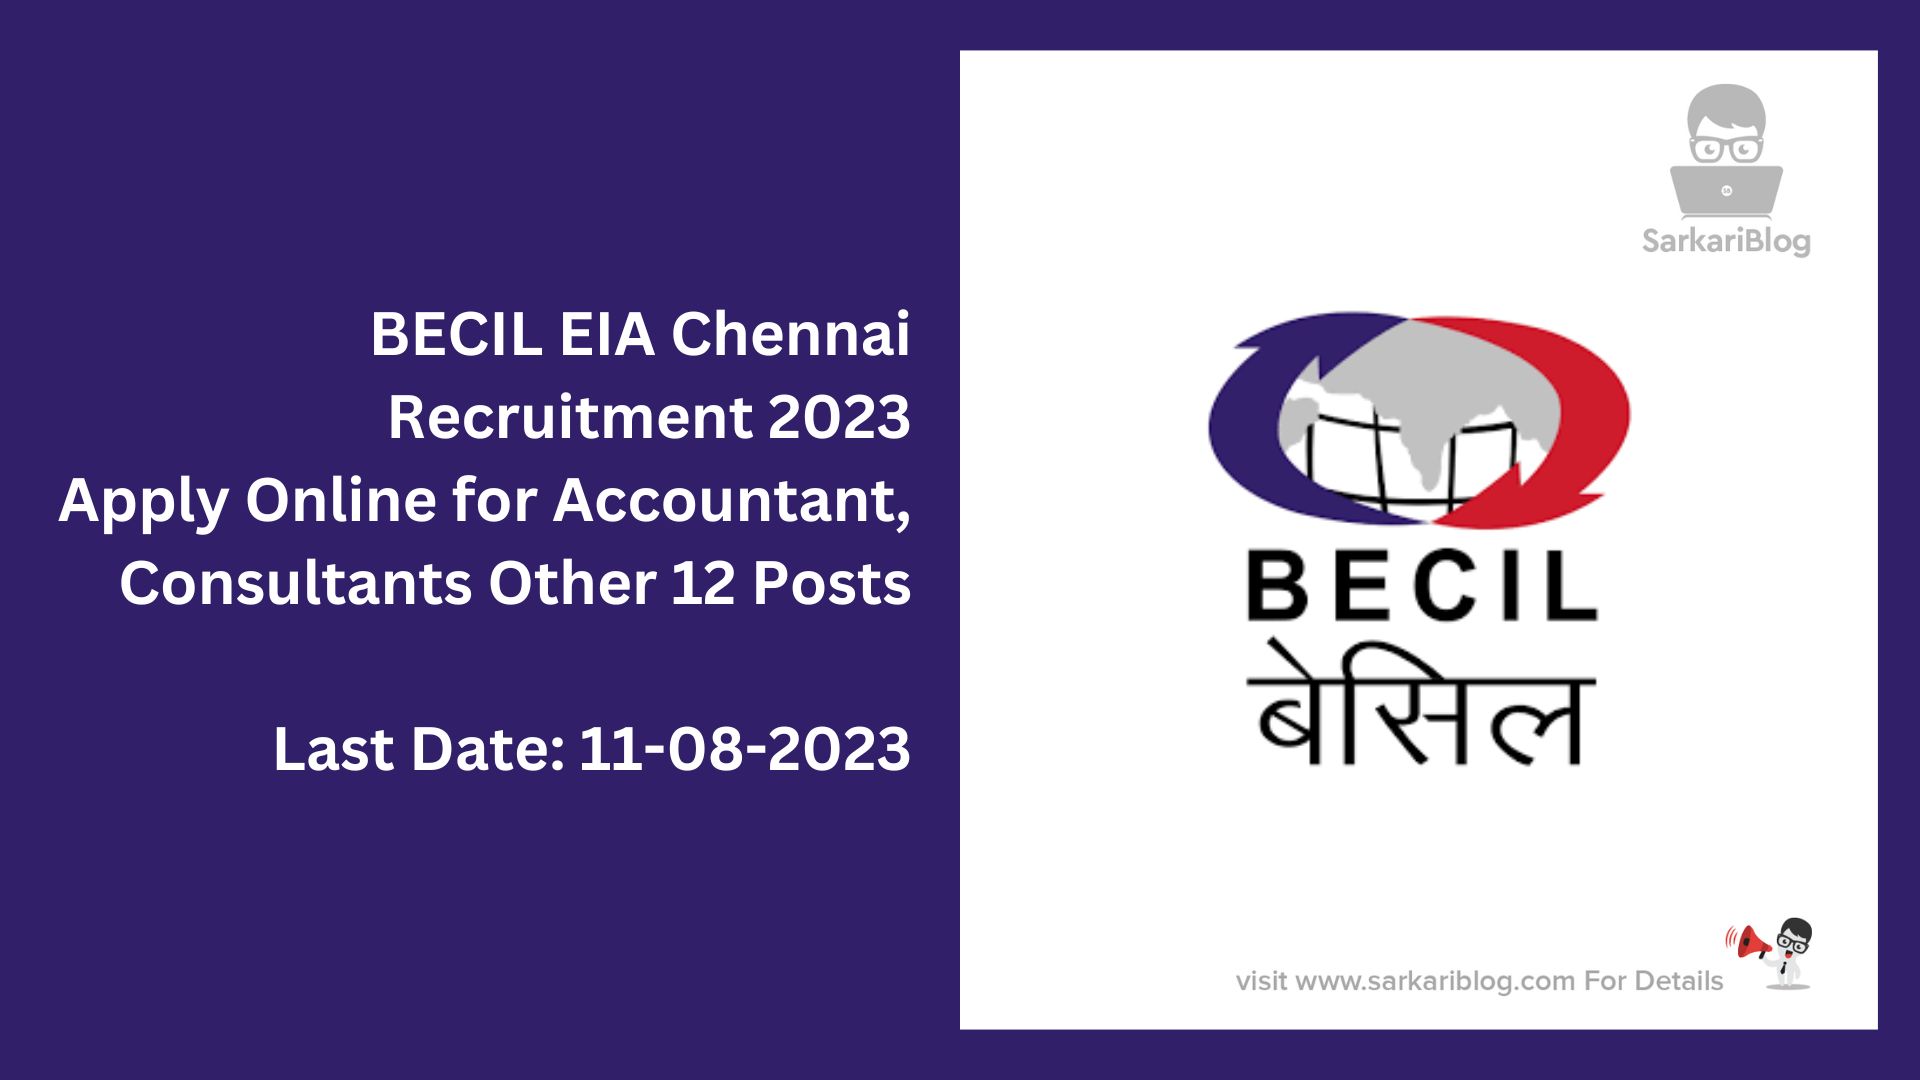 BECIL EIA Chennai Recruitment 2023